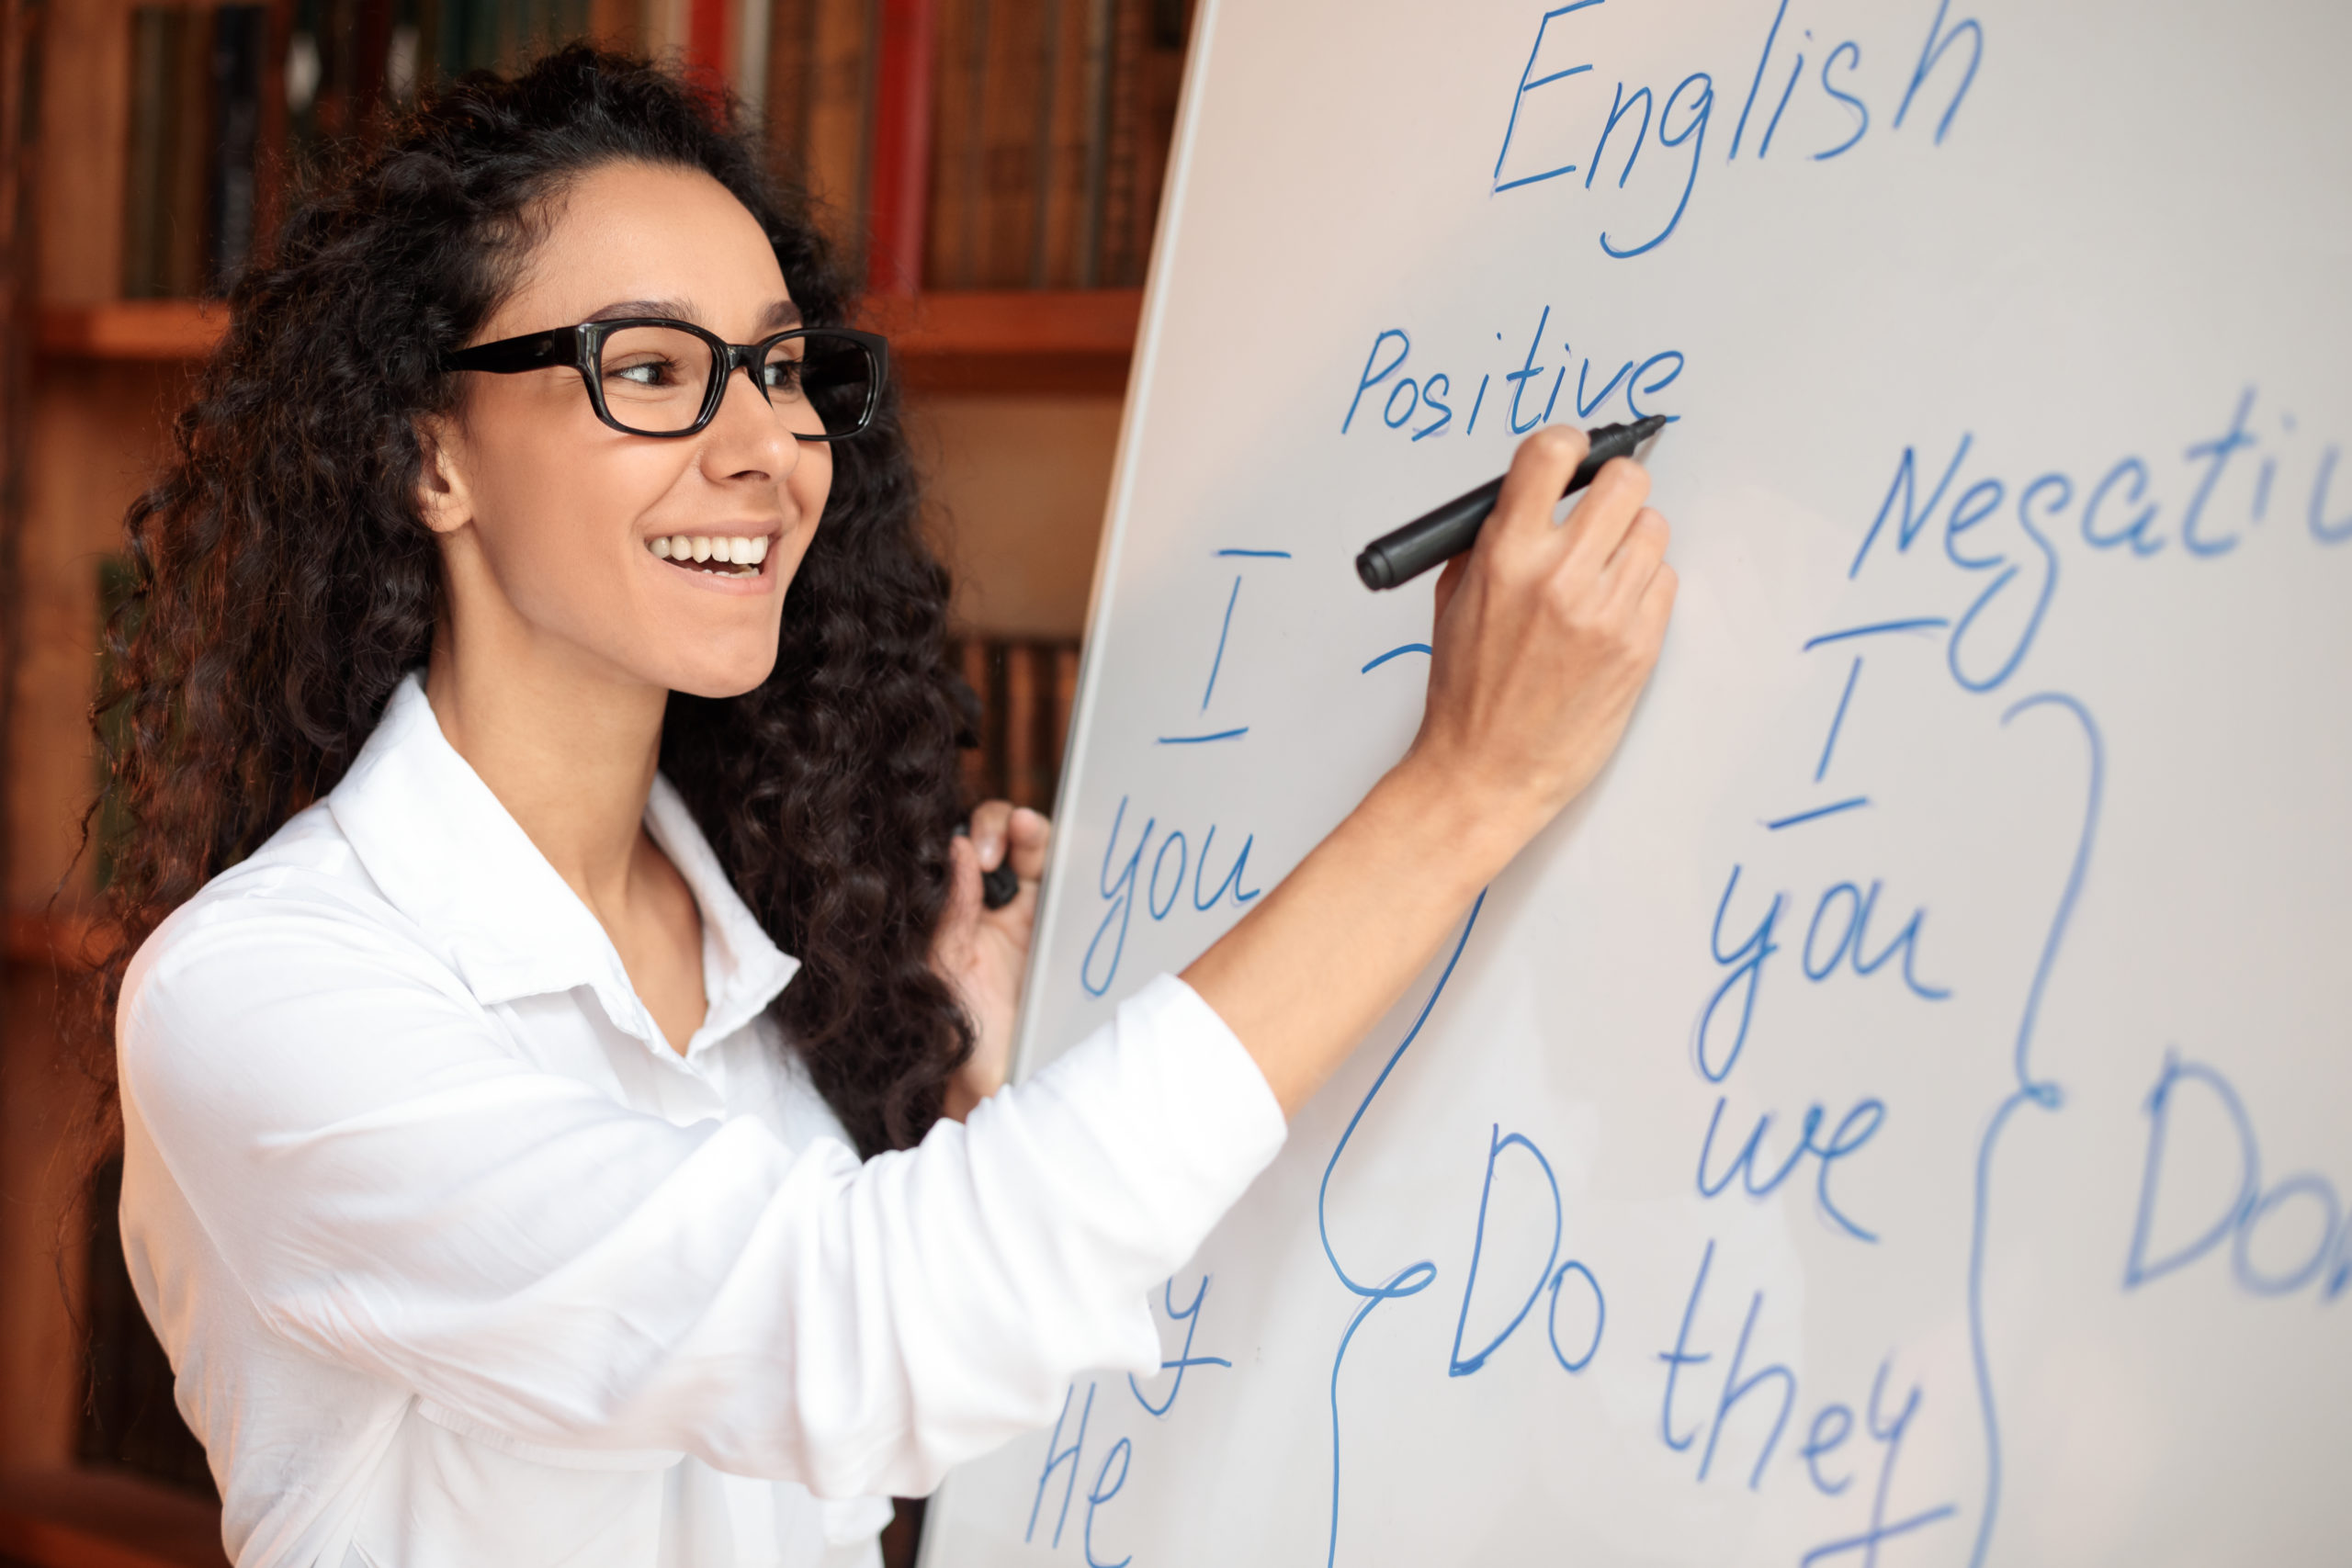 Smiling female teacher writing at whiteboard, explaining rules